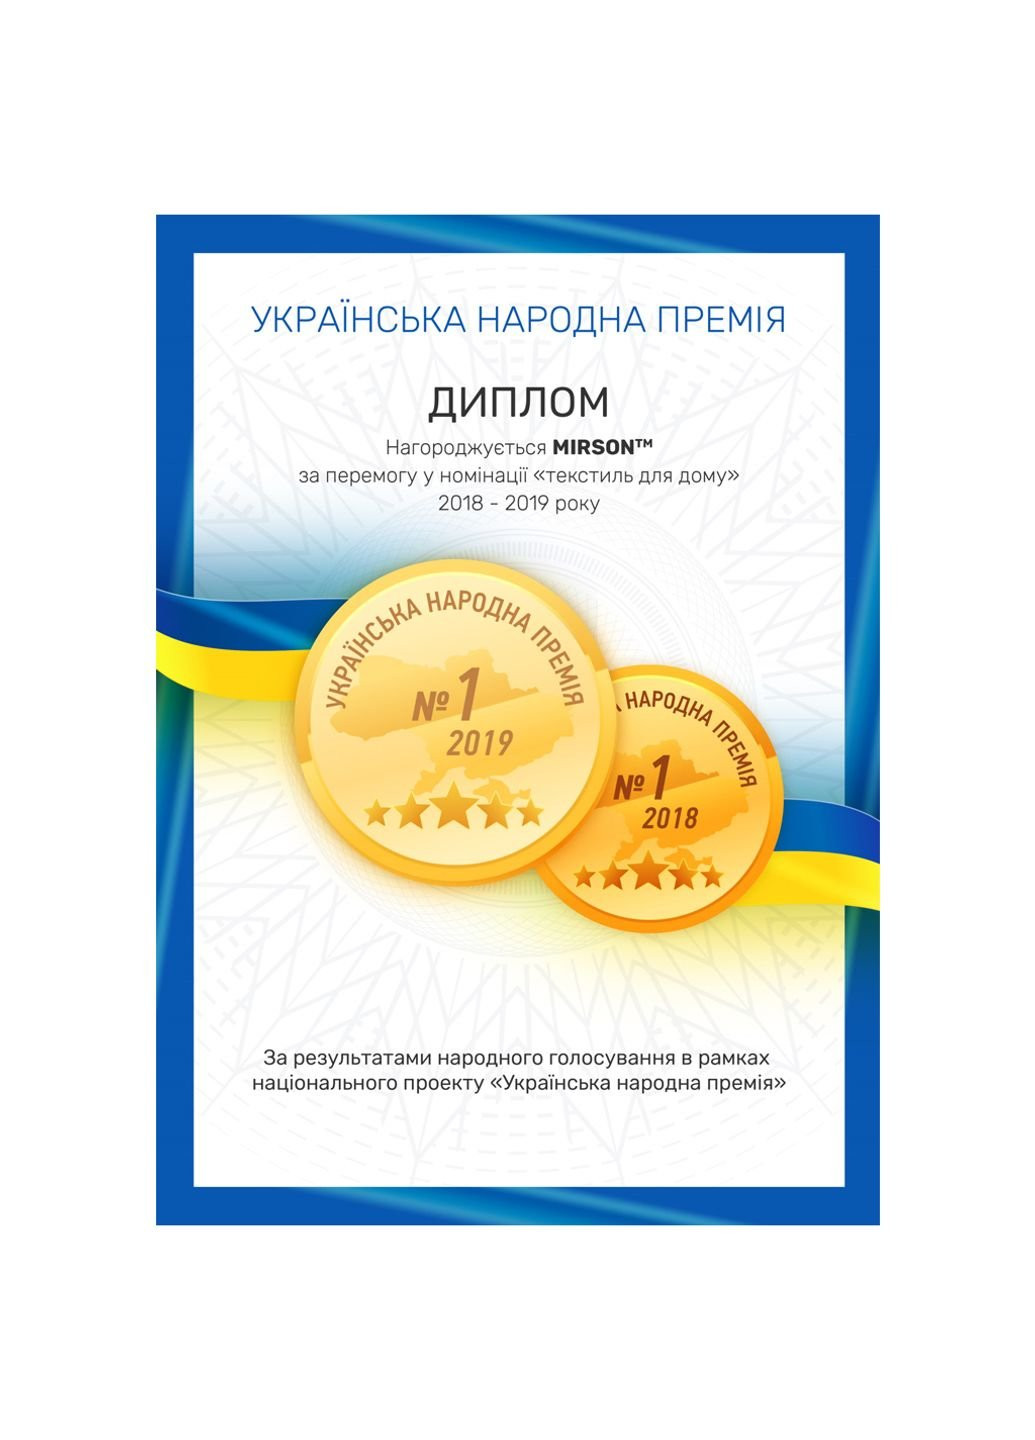 No Brand полотенце mirson набор банный №5005 softness ivory 50x90, 70x140, 100x150 (2200003182651) молочный производство - Украина